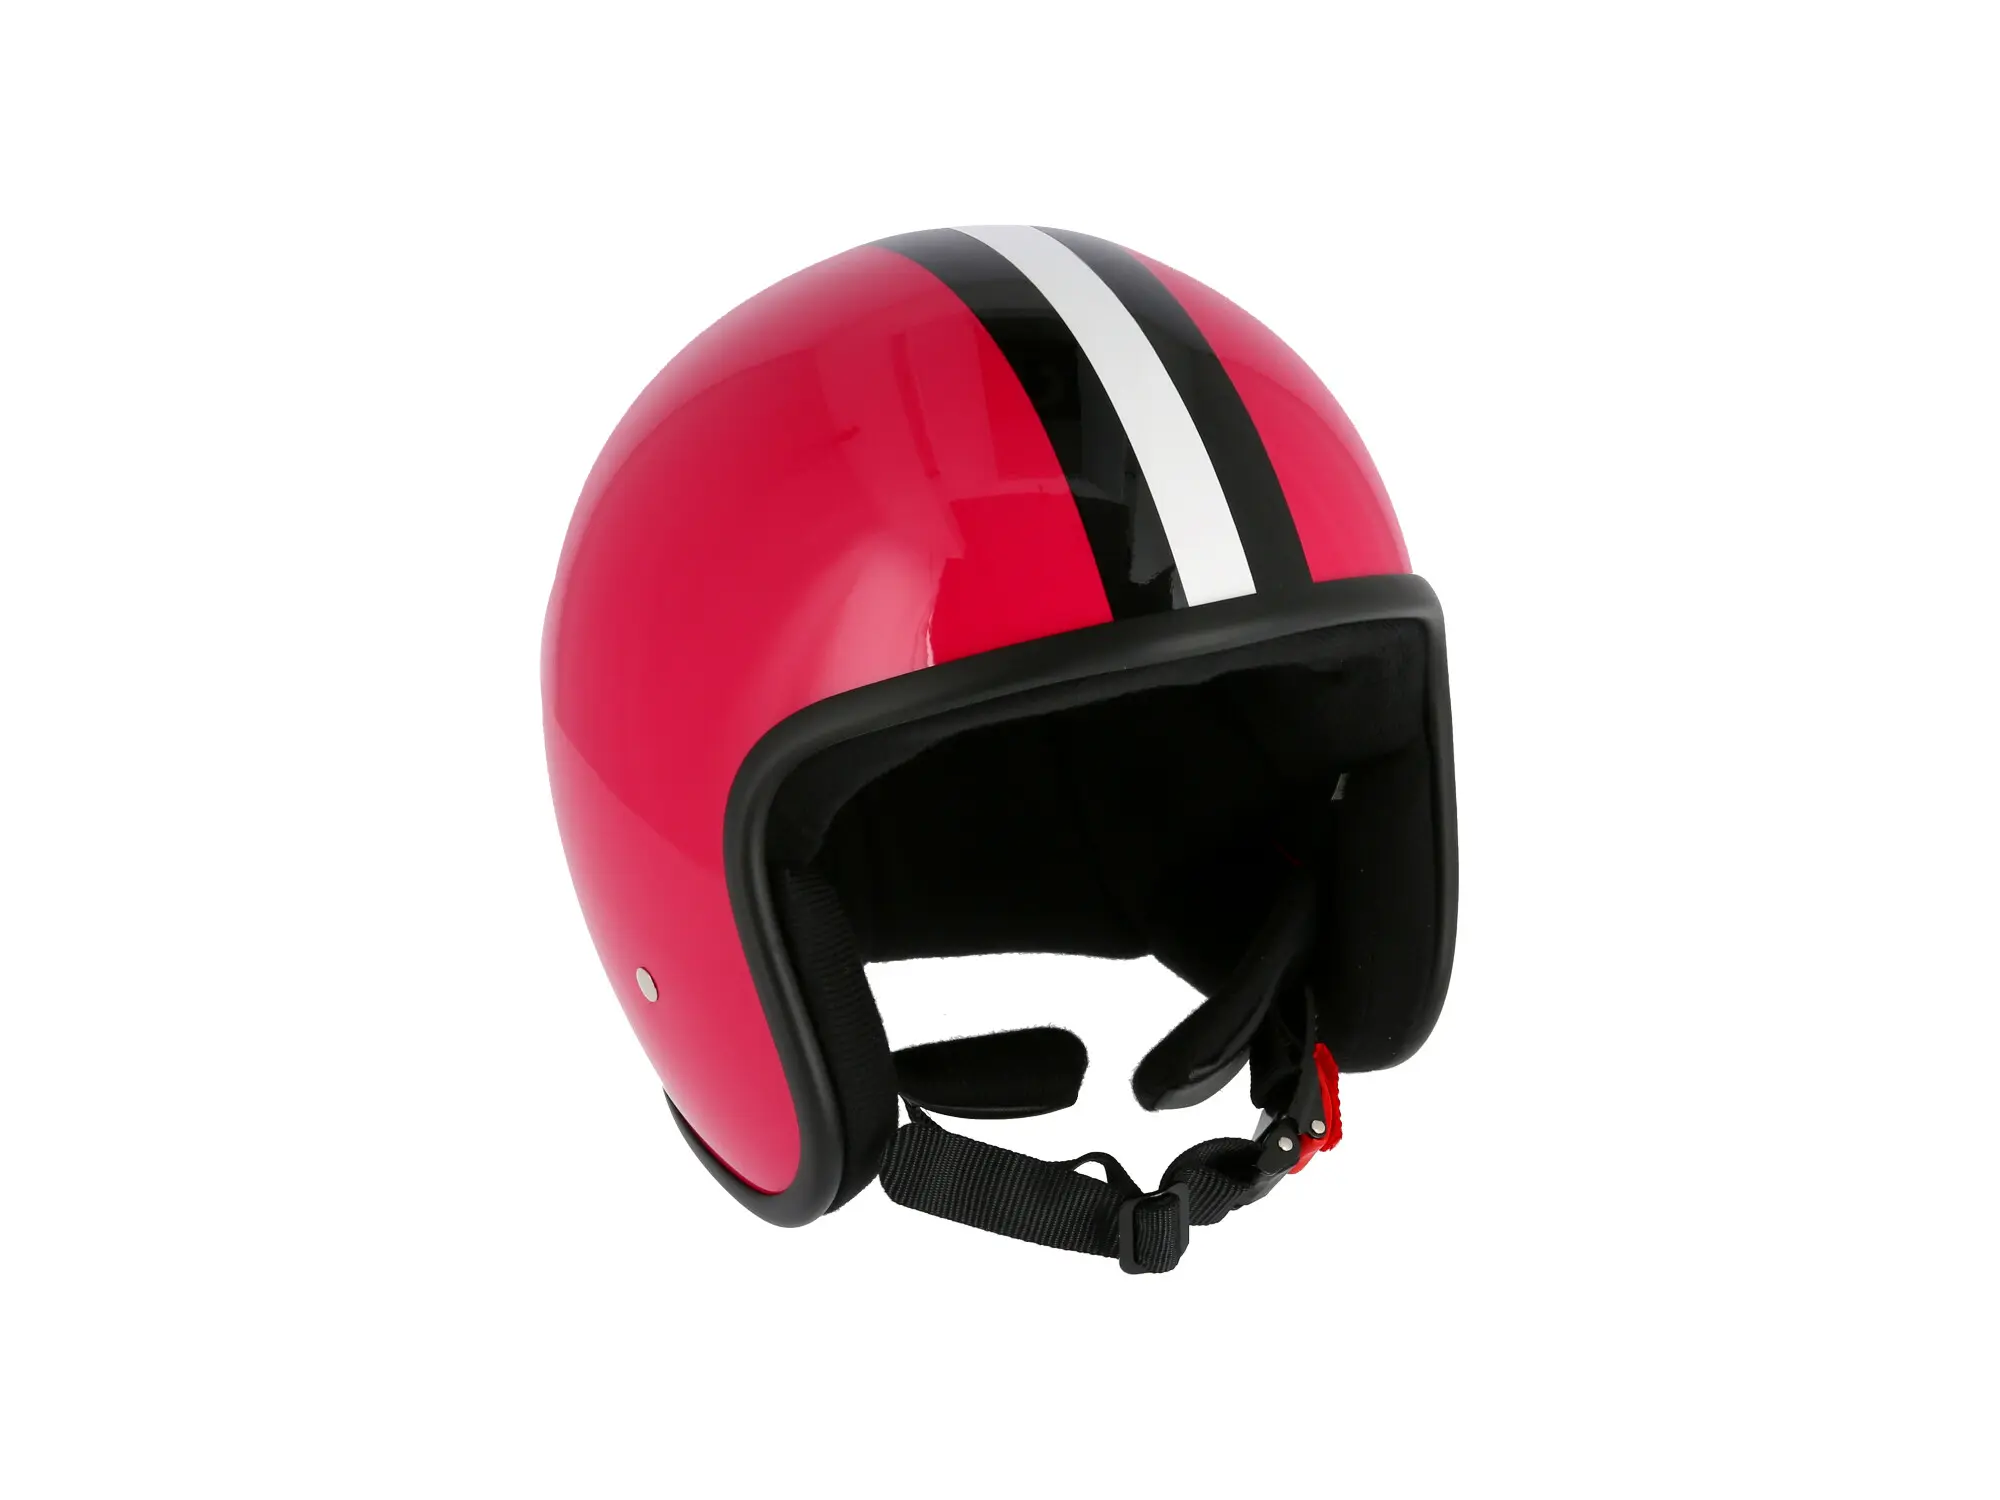 ARC Helm "Modell A-611" Retrolook - Pink mit Streifen, Art.-Nr.: 10071225 - Bild 1